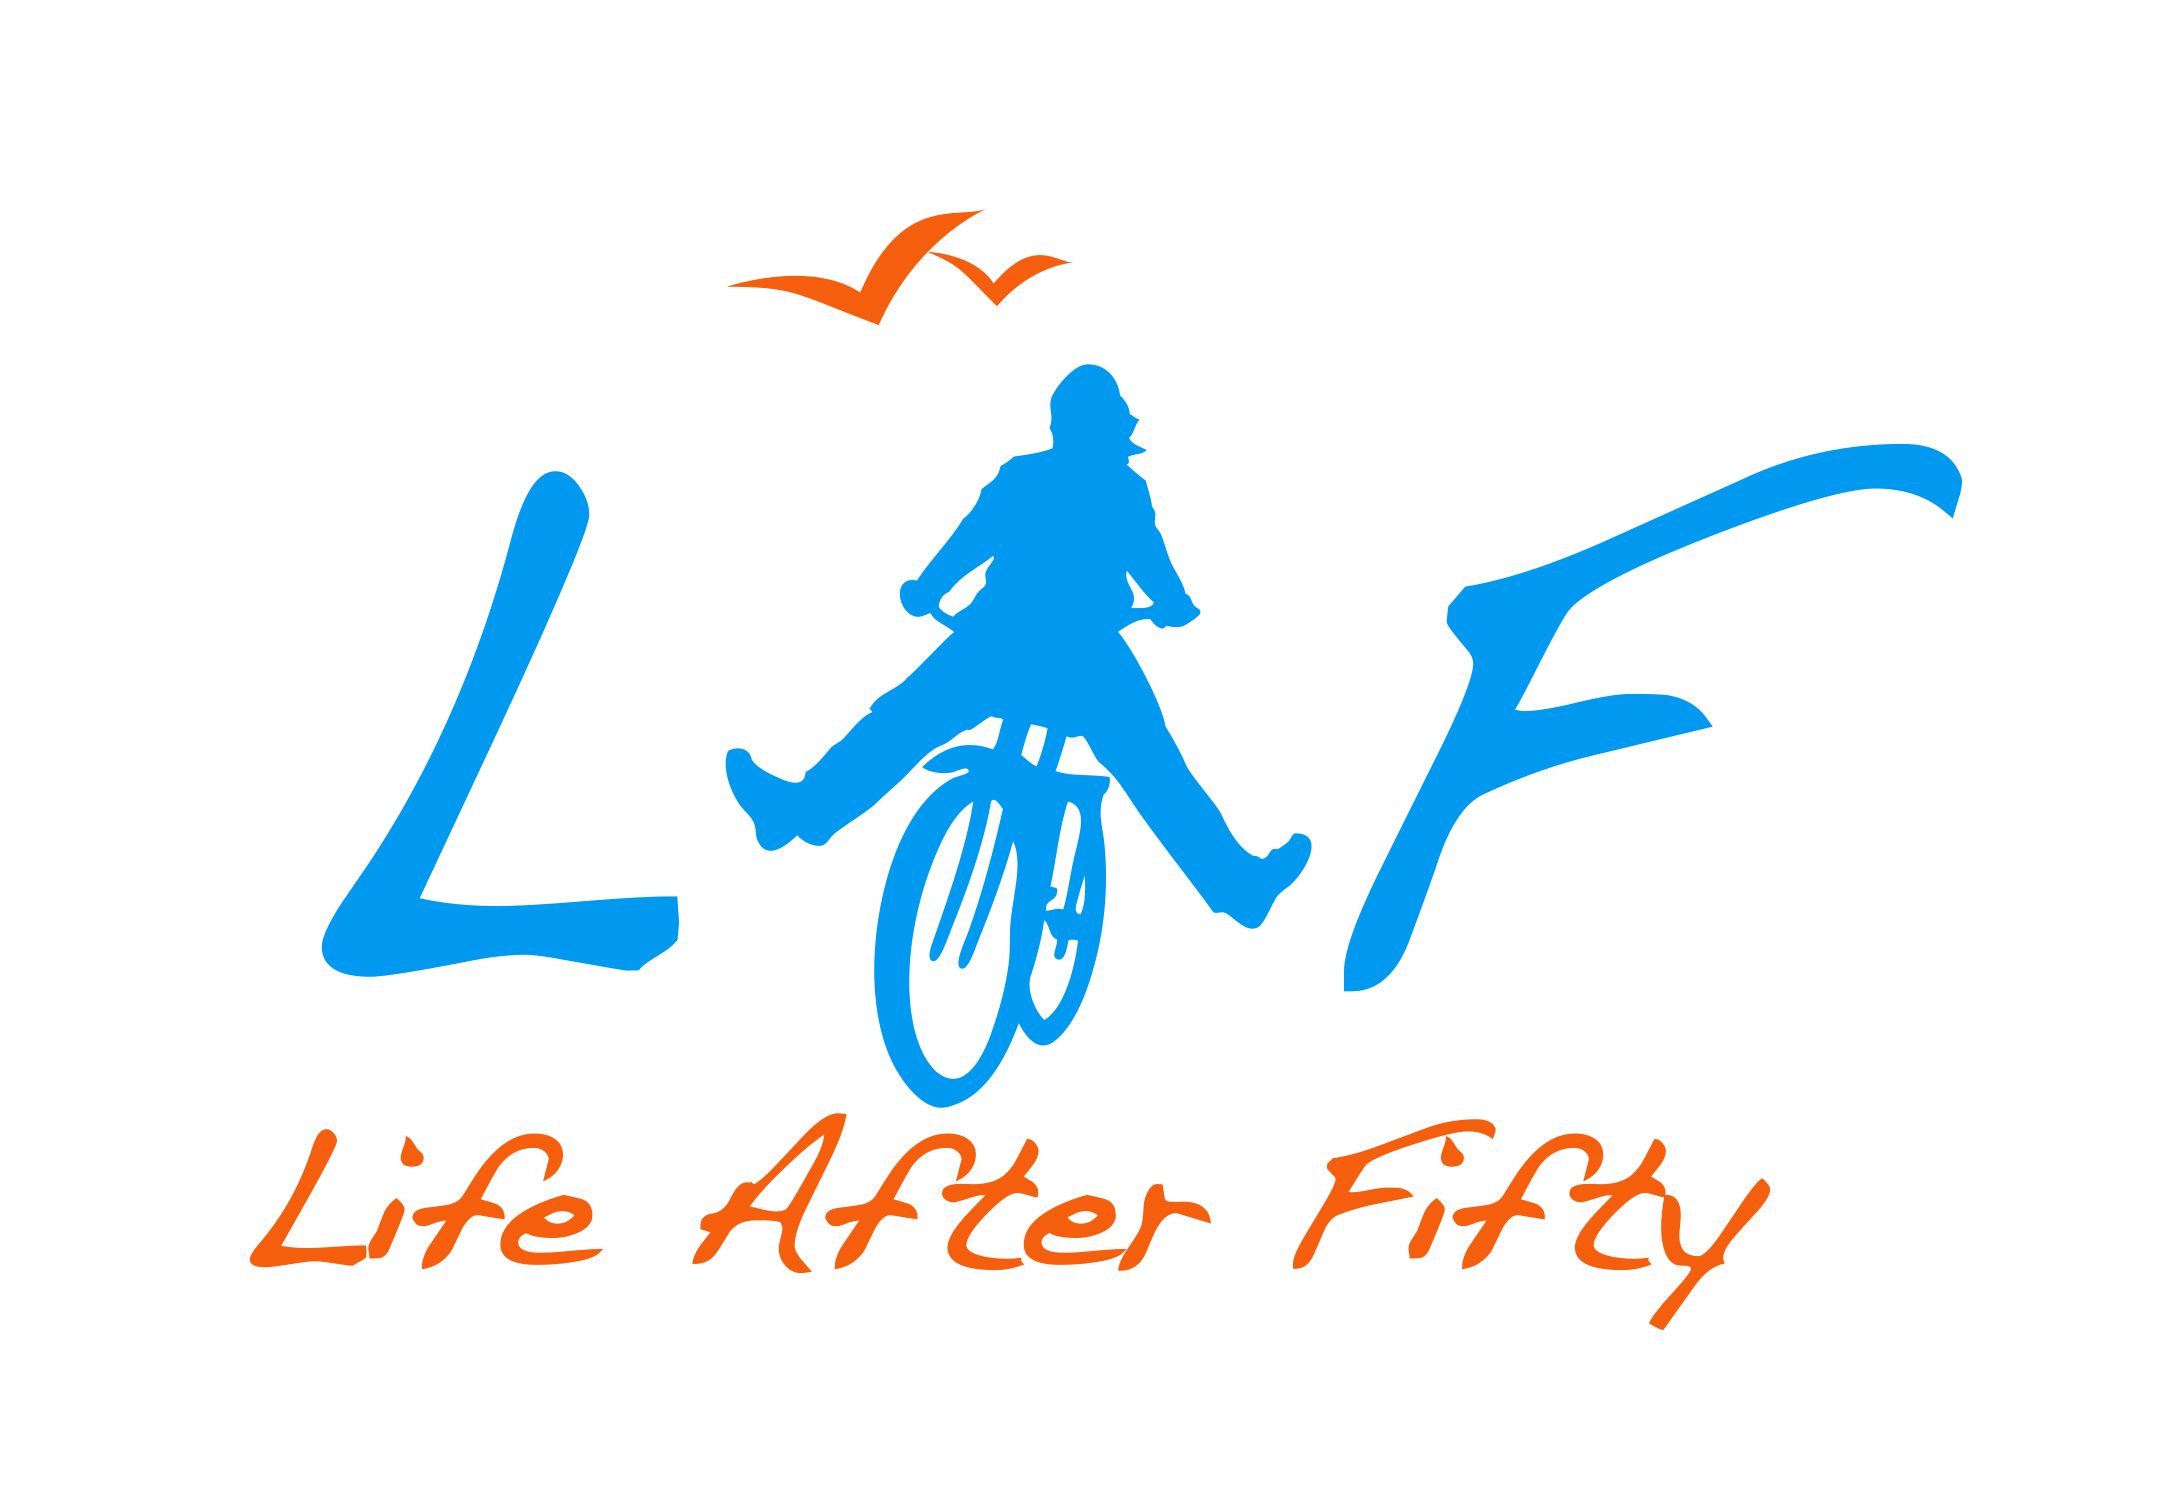 CENTRES FOR SENIORS WINDSOR (o/a Life After Fifty) logo